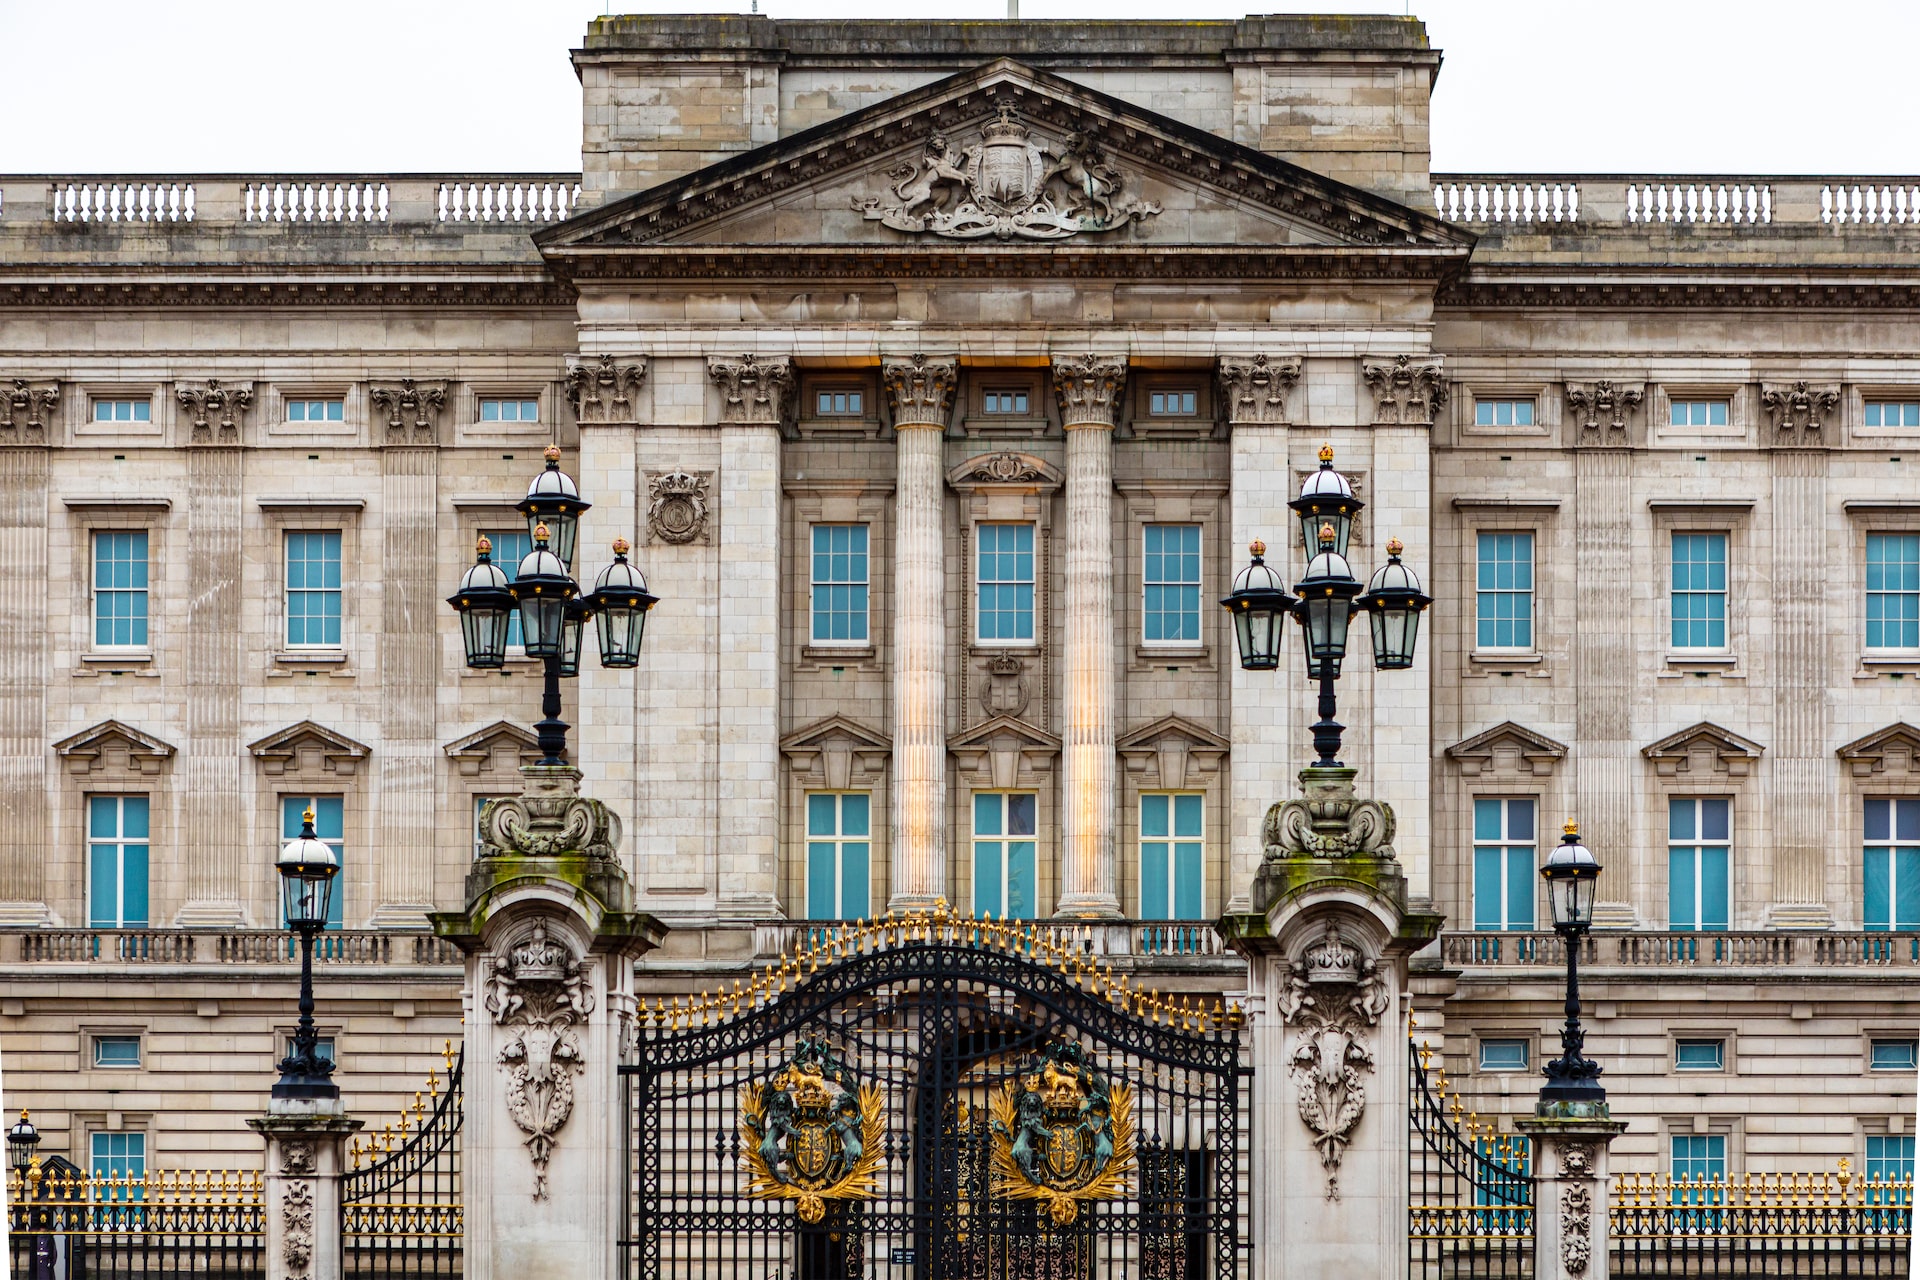 No inheritance tax bill for King Charles III